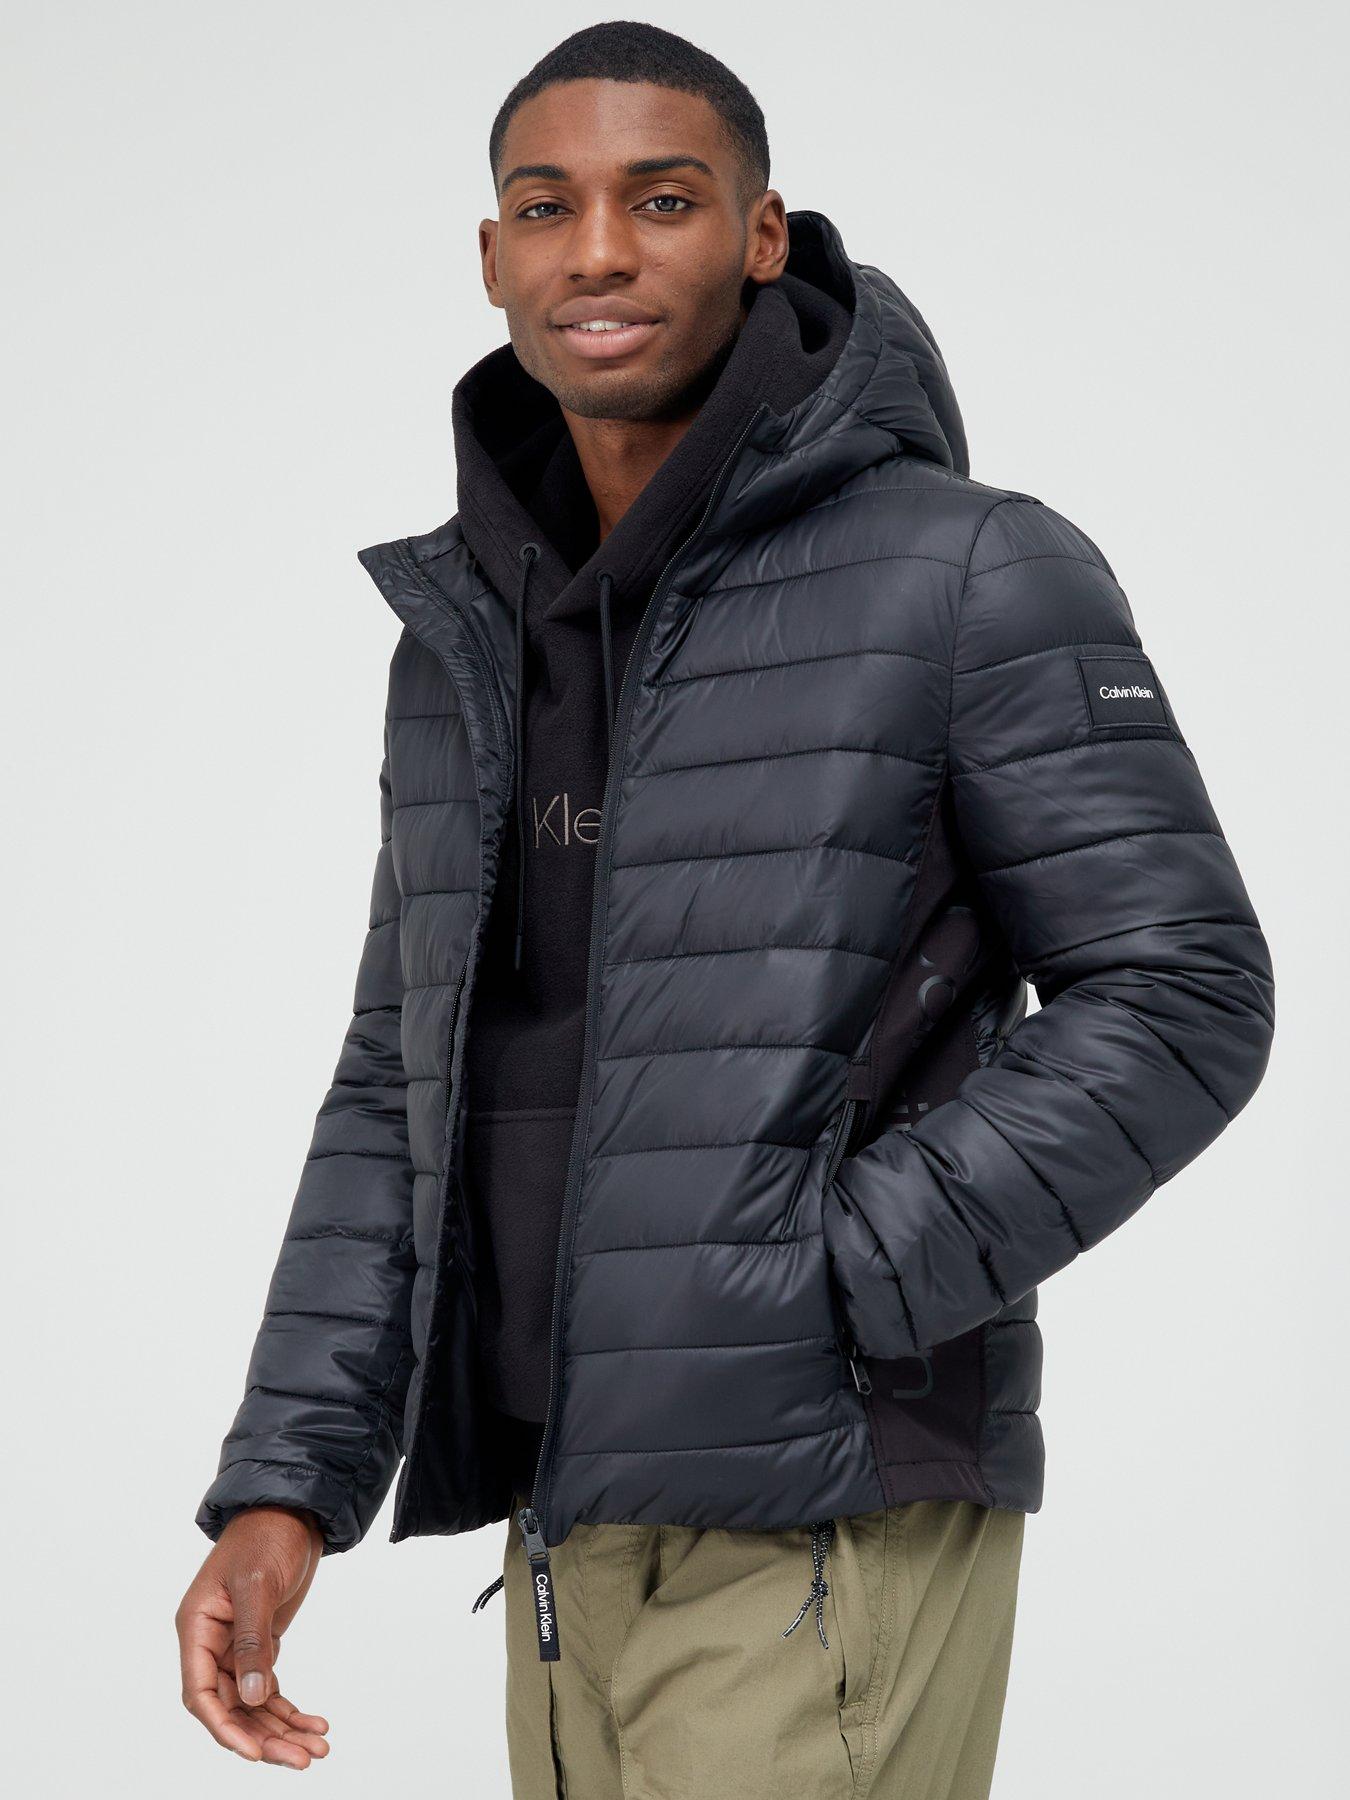 L | Calvin klein | Coats & jackets | Men 